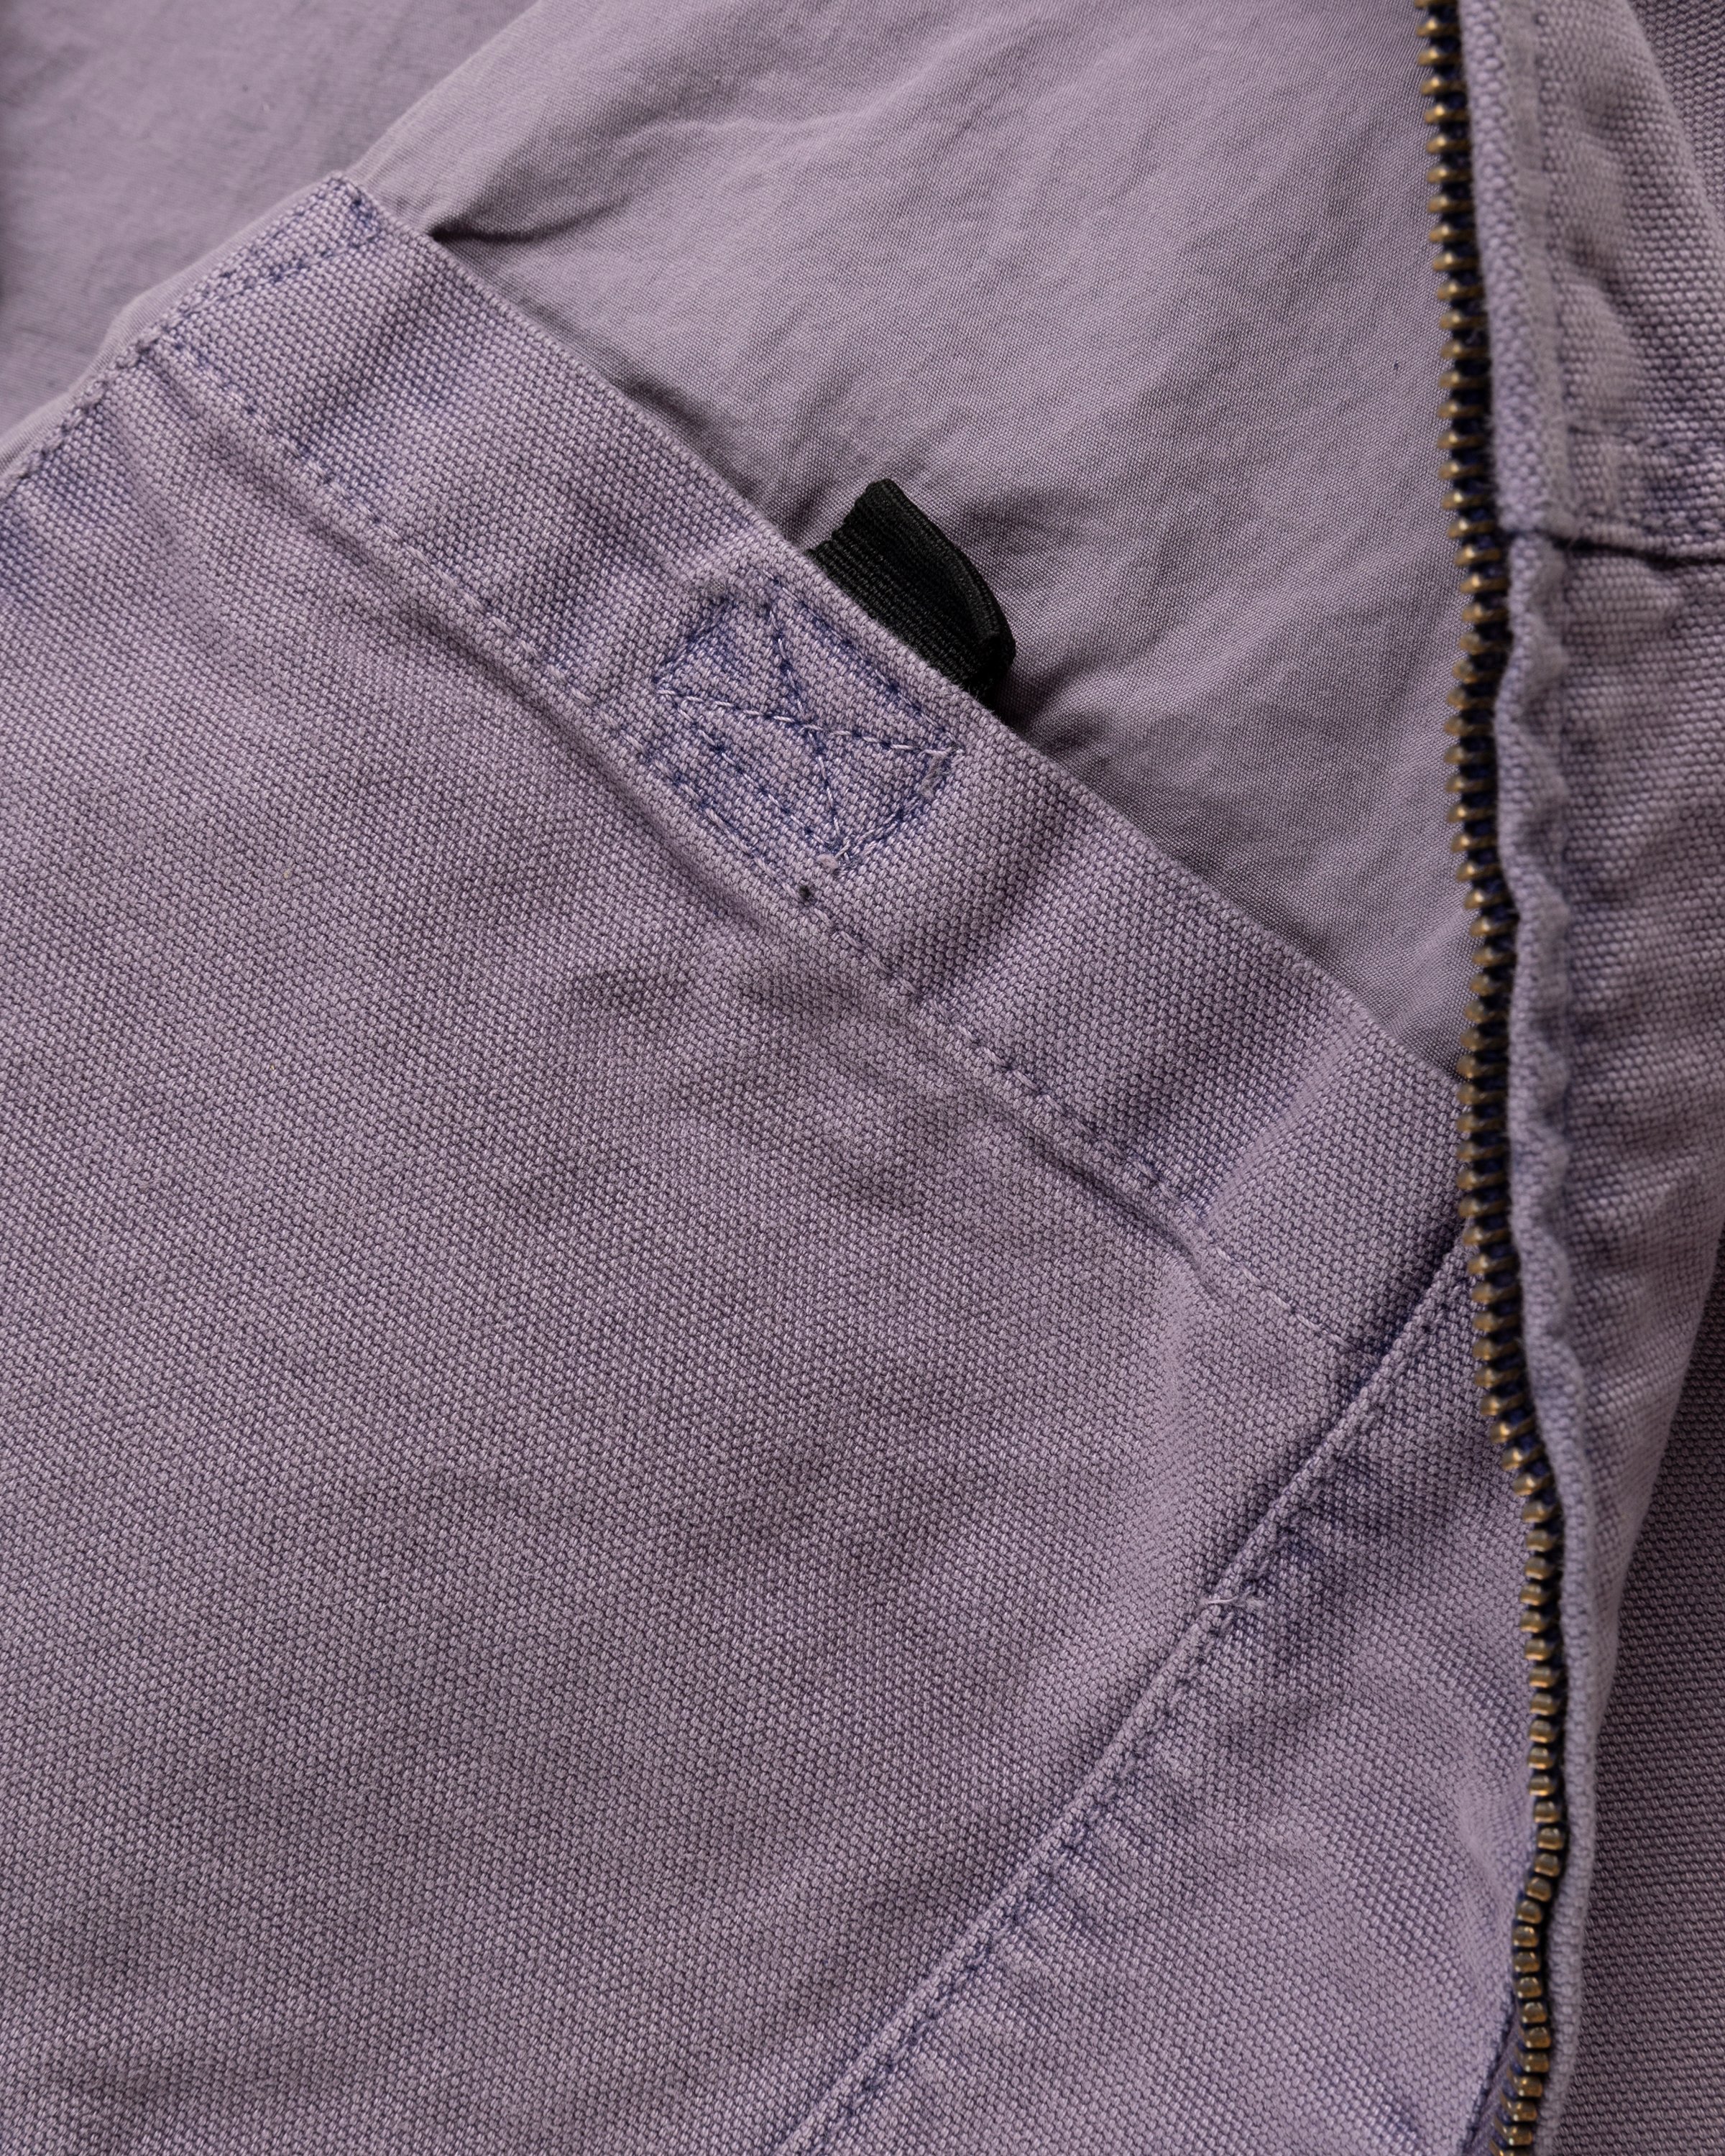 Carhartt WIP - OG Santa Fe Jacket Razzmic Faded - Clothing - Purple - Image 7